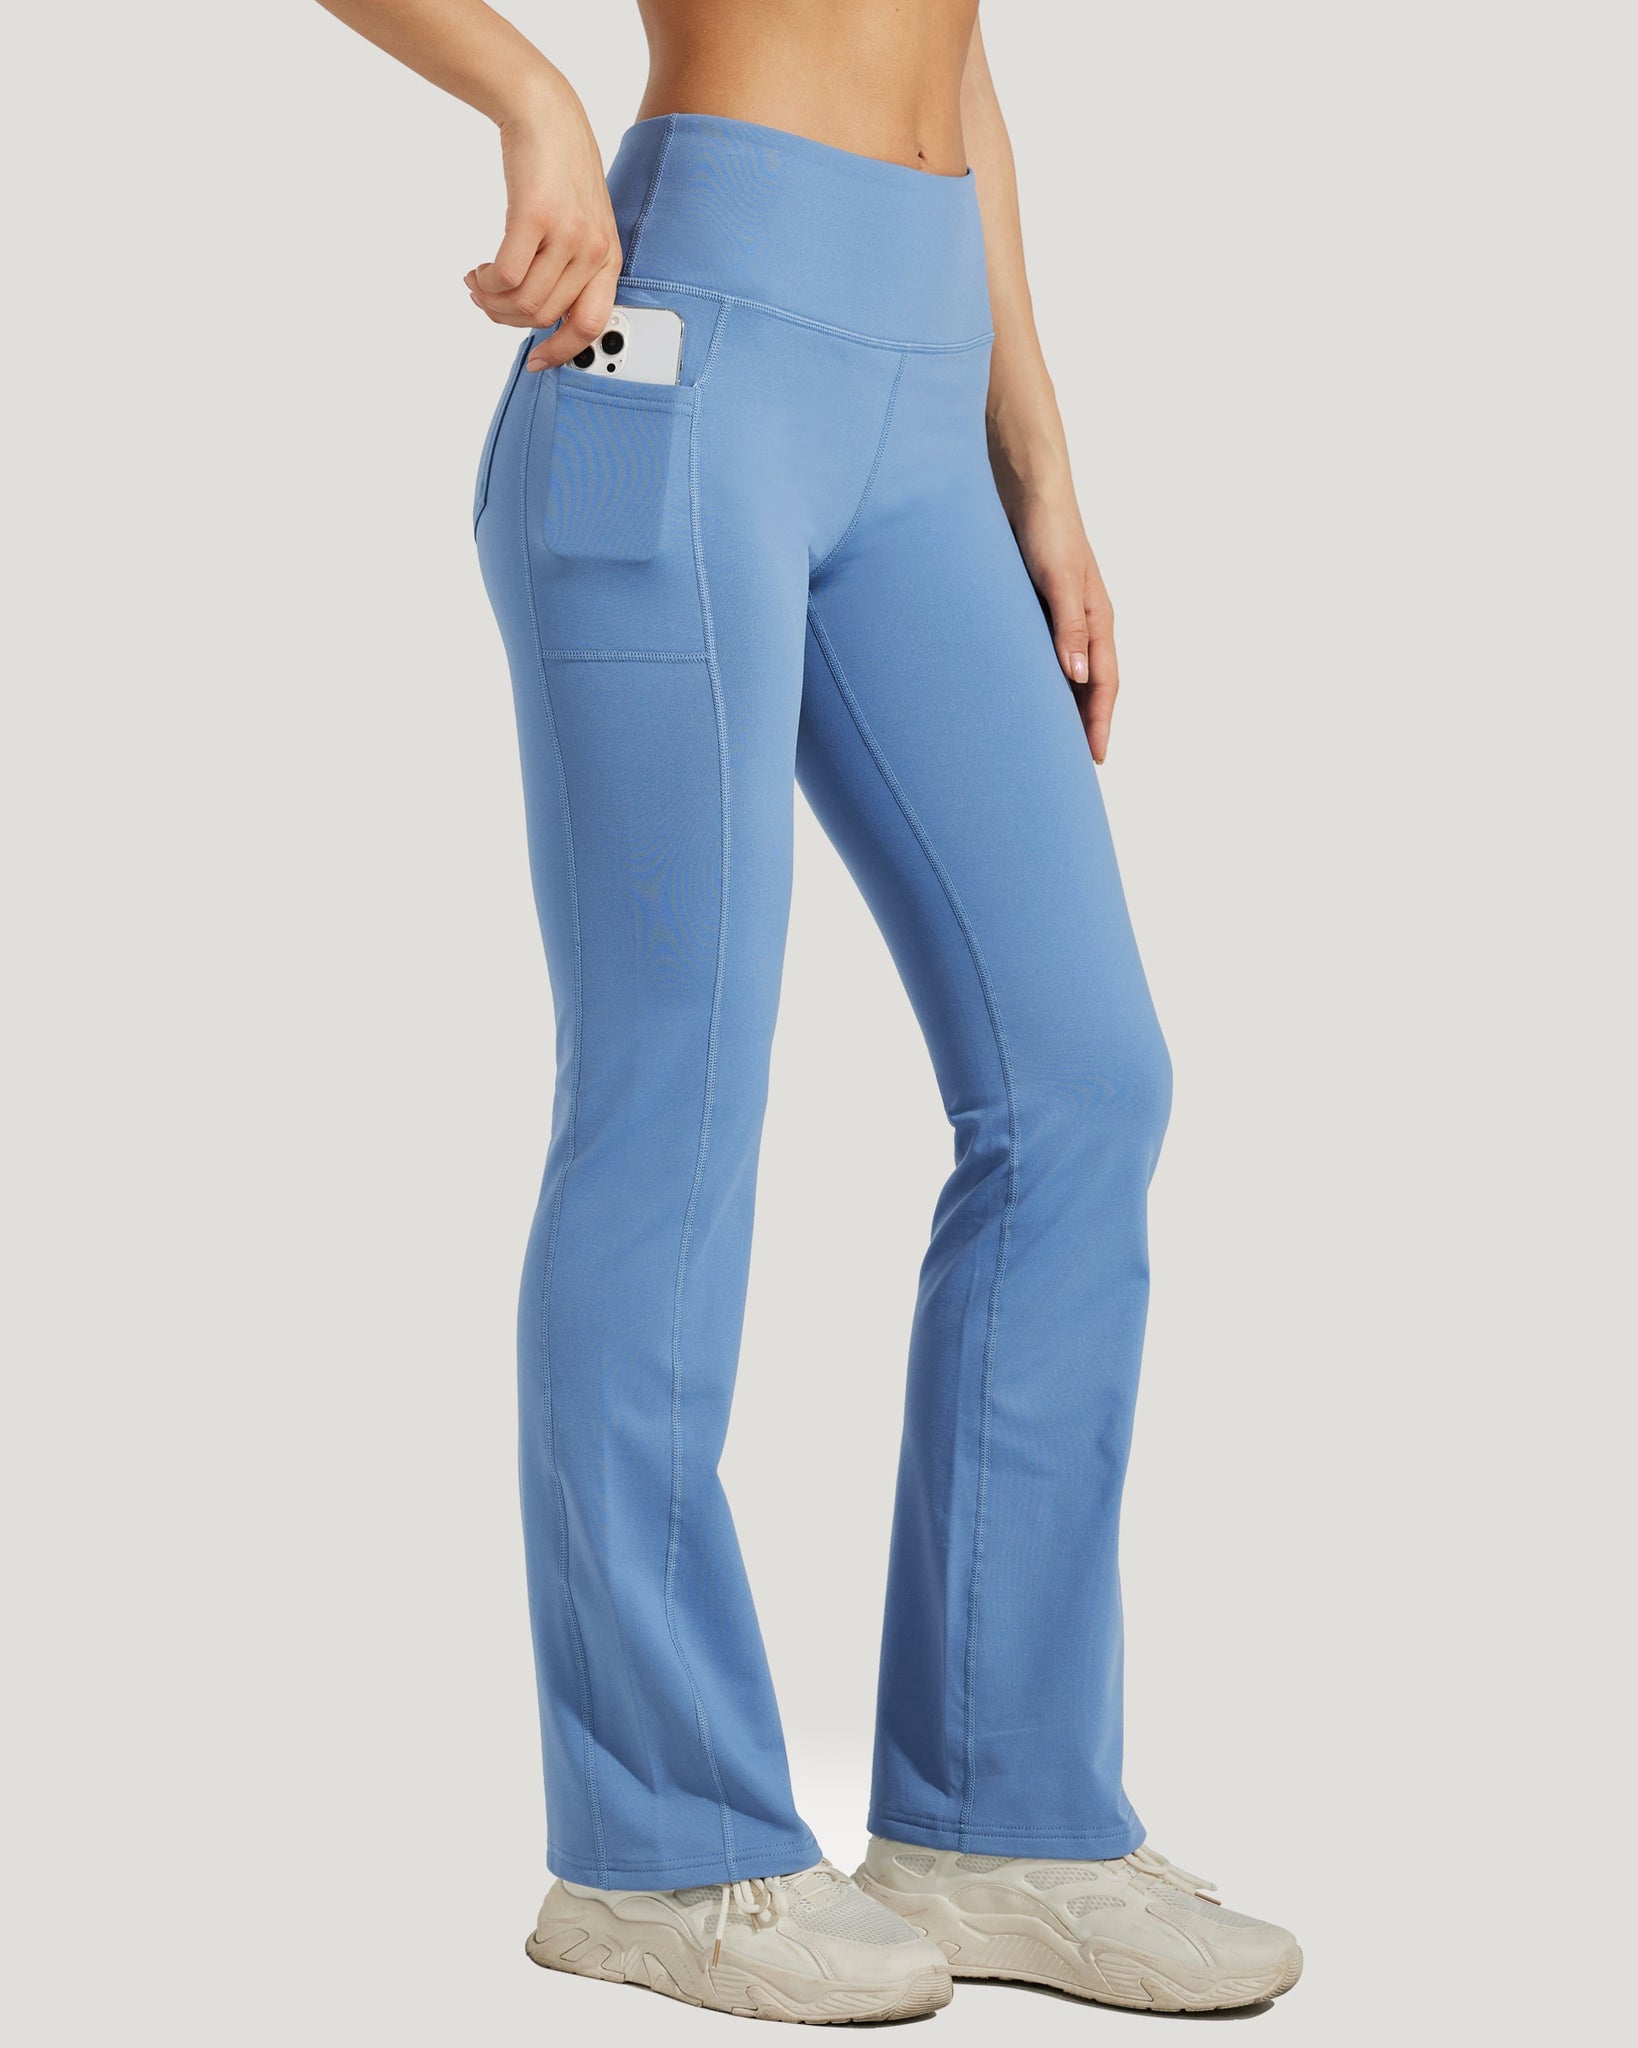 Women's Fleece Lined Bootcut Yoga Pants_Blue_model3